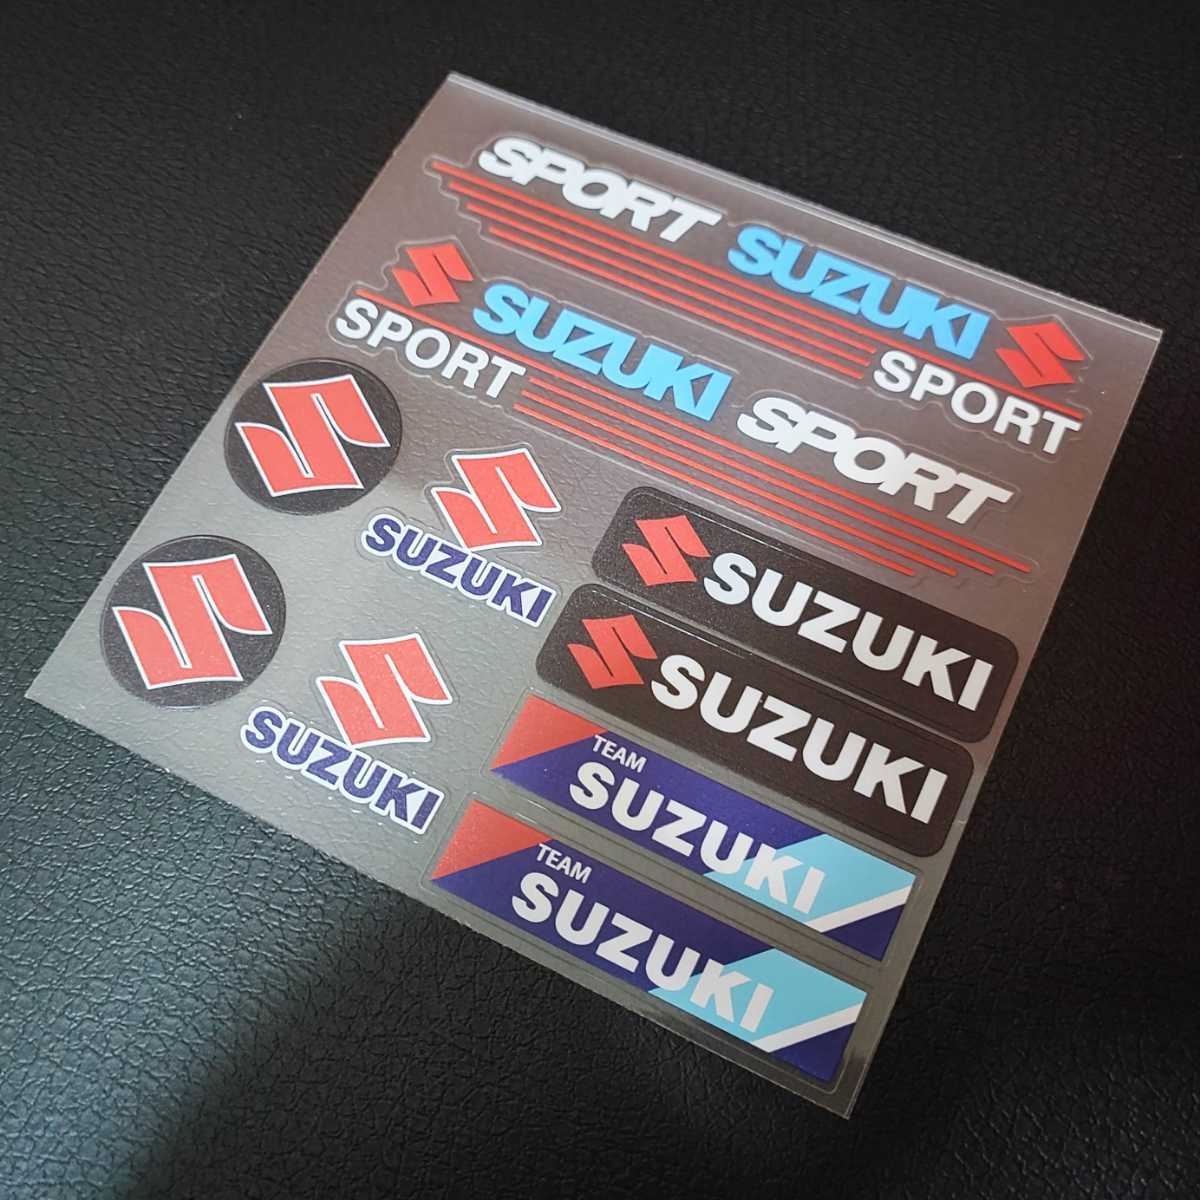  Suzuki SPORT sticker 10P# Jimny Every Wagon Cross Be Wagon R stingray Alto Lapin Spacia Hustler Swift 